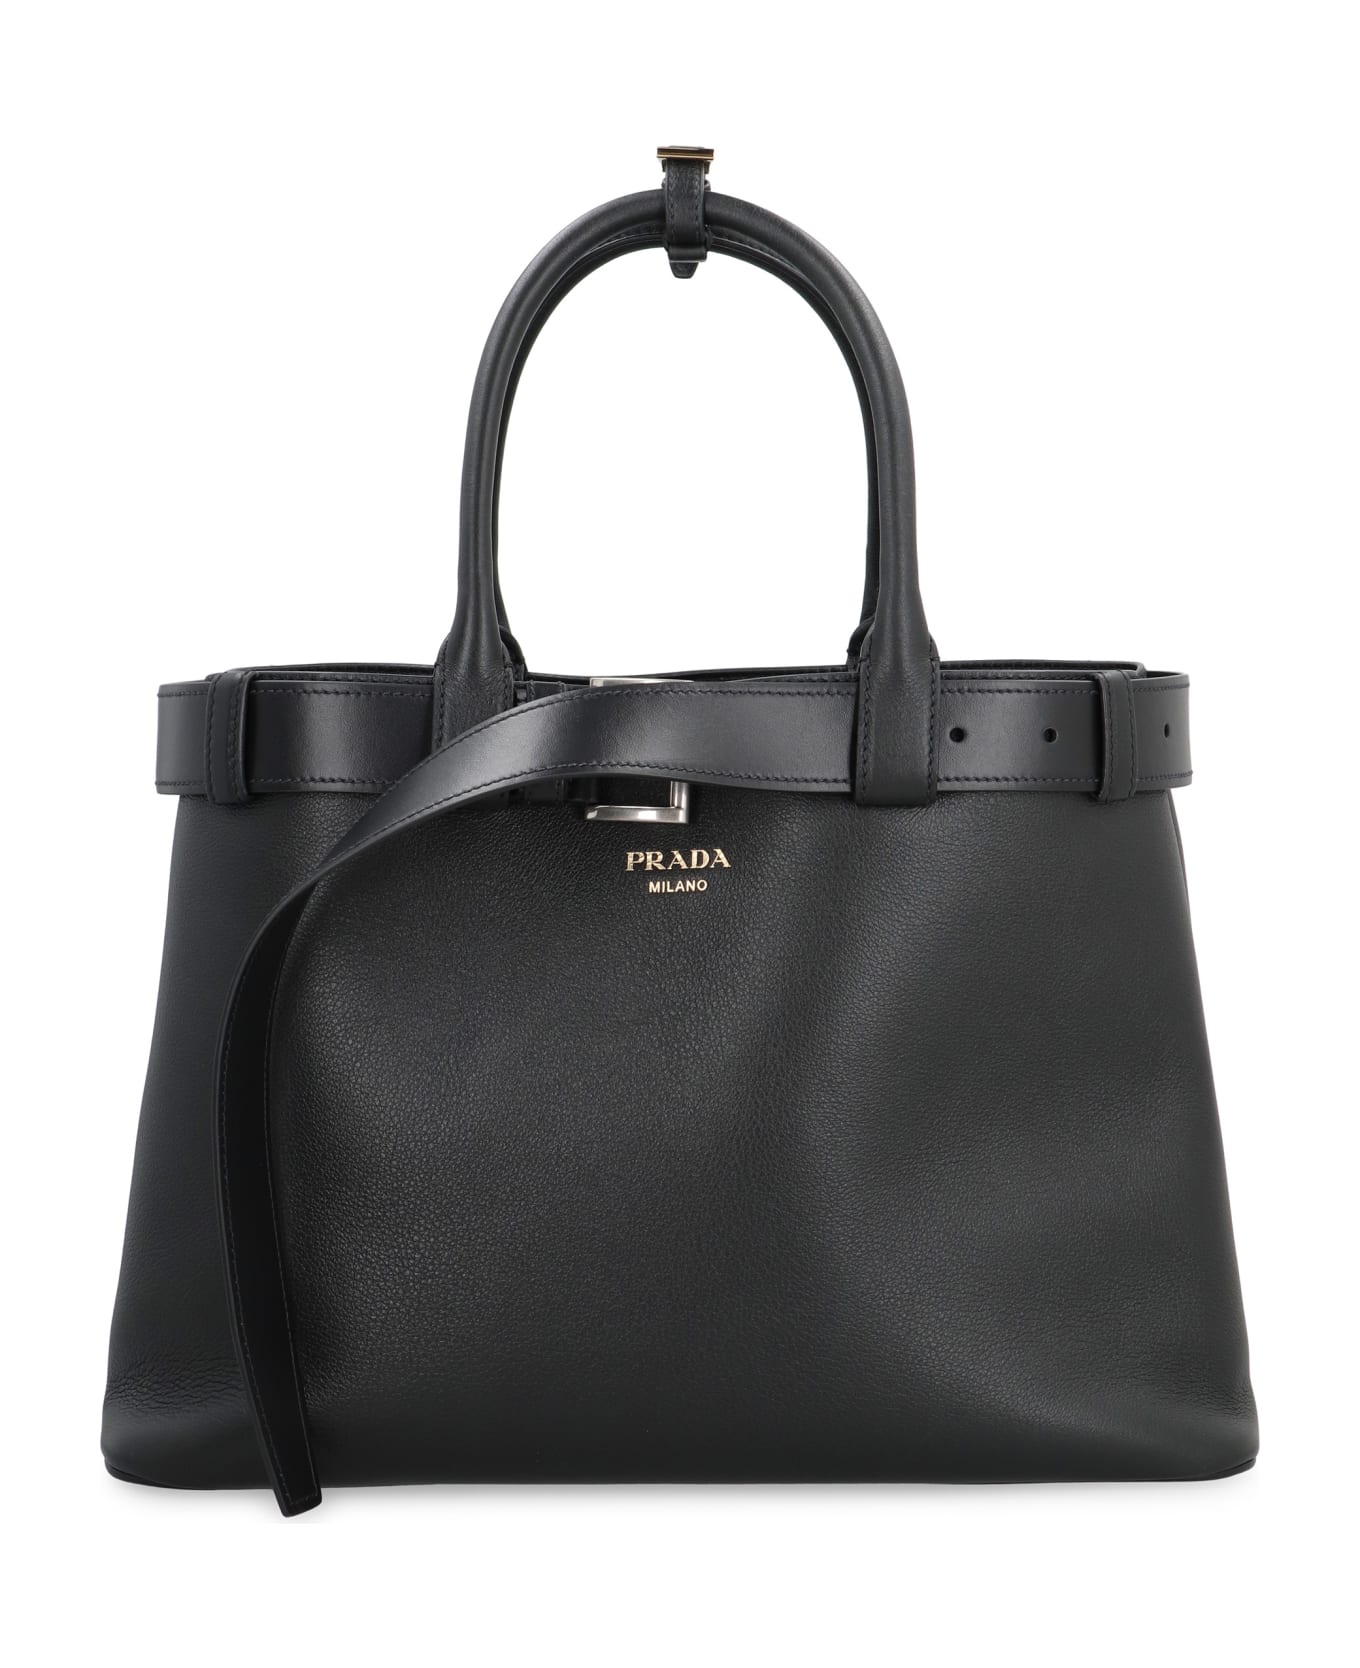 Prada Buckle Leather Bag - black